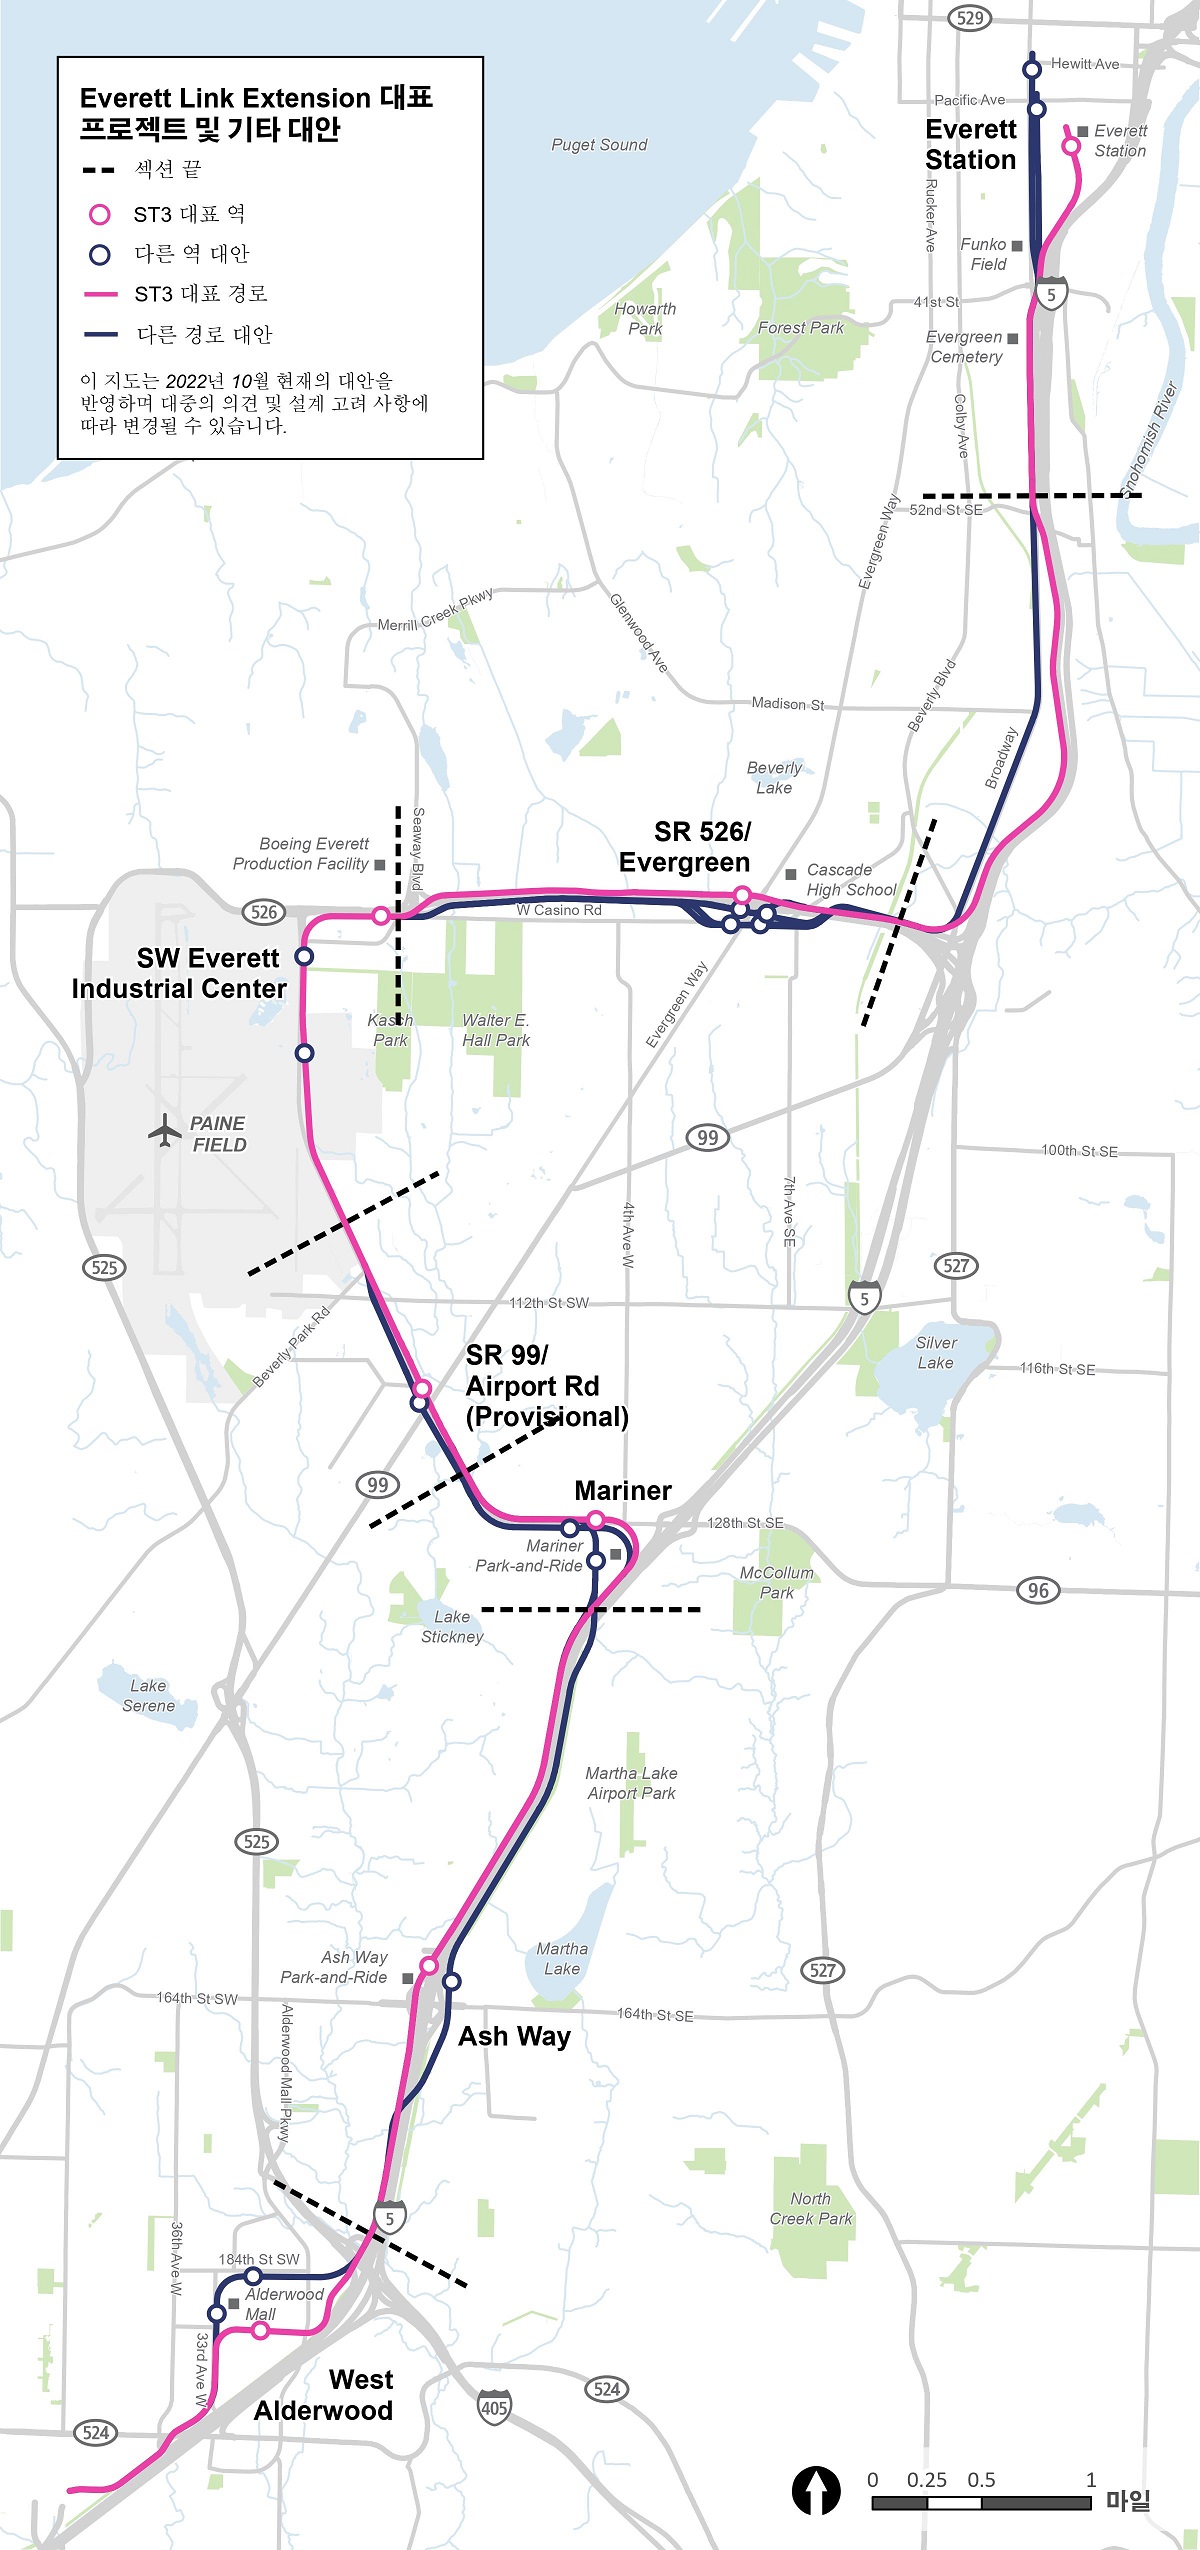 Everett Link Extension 프로젝트 영역 지도.